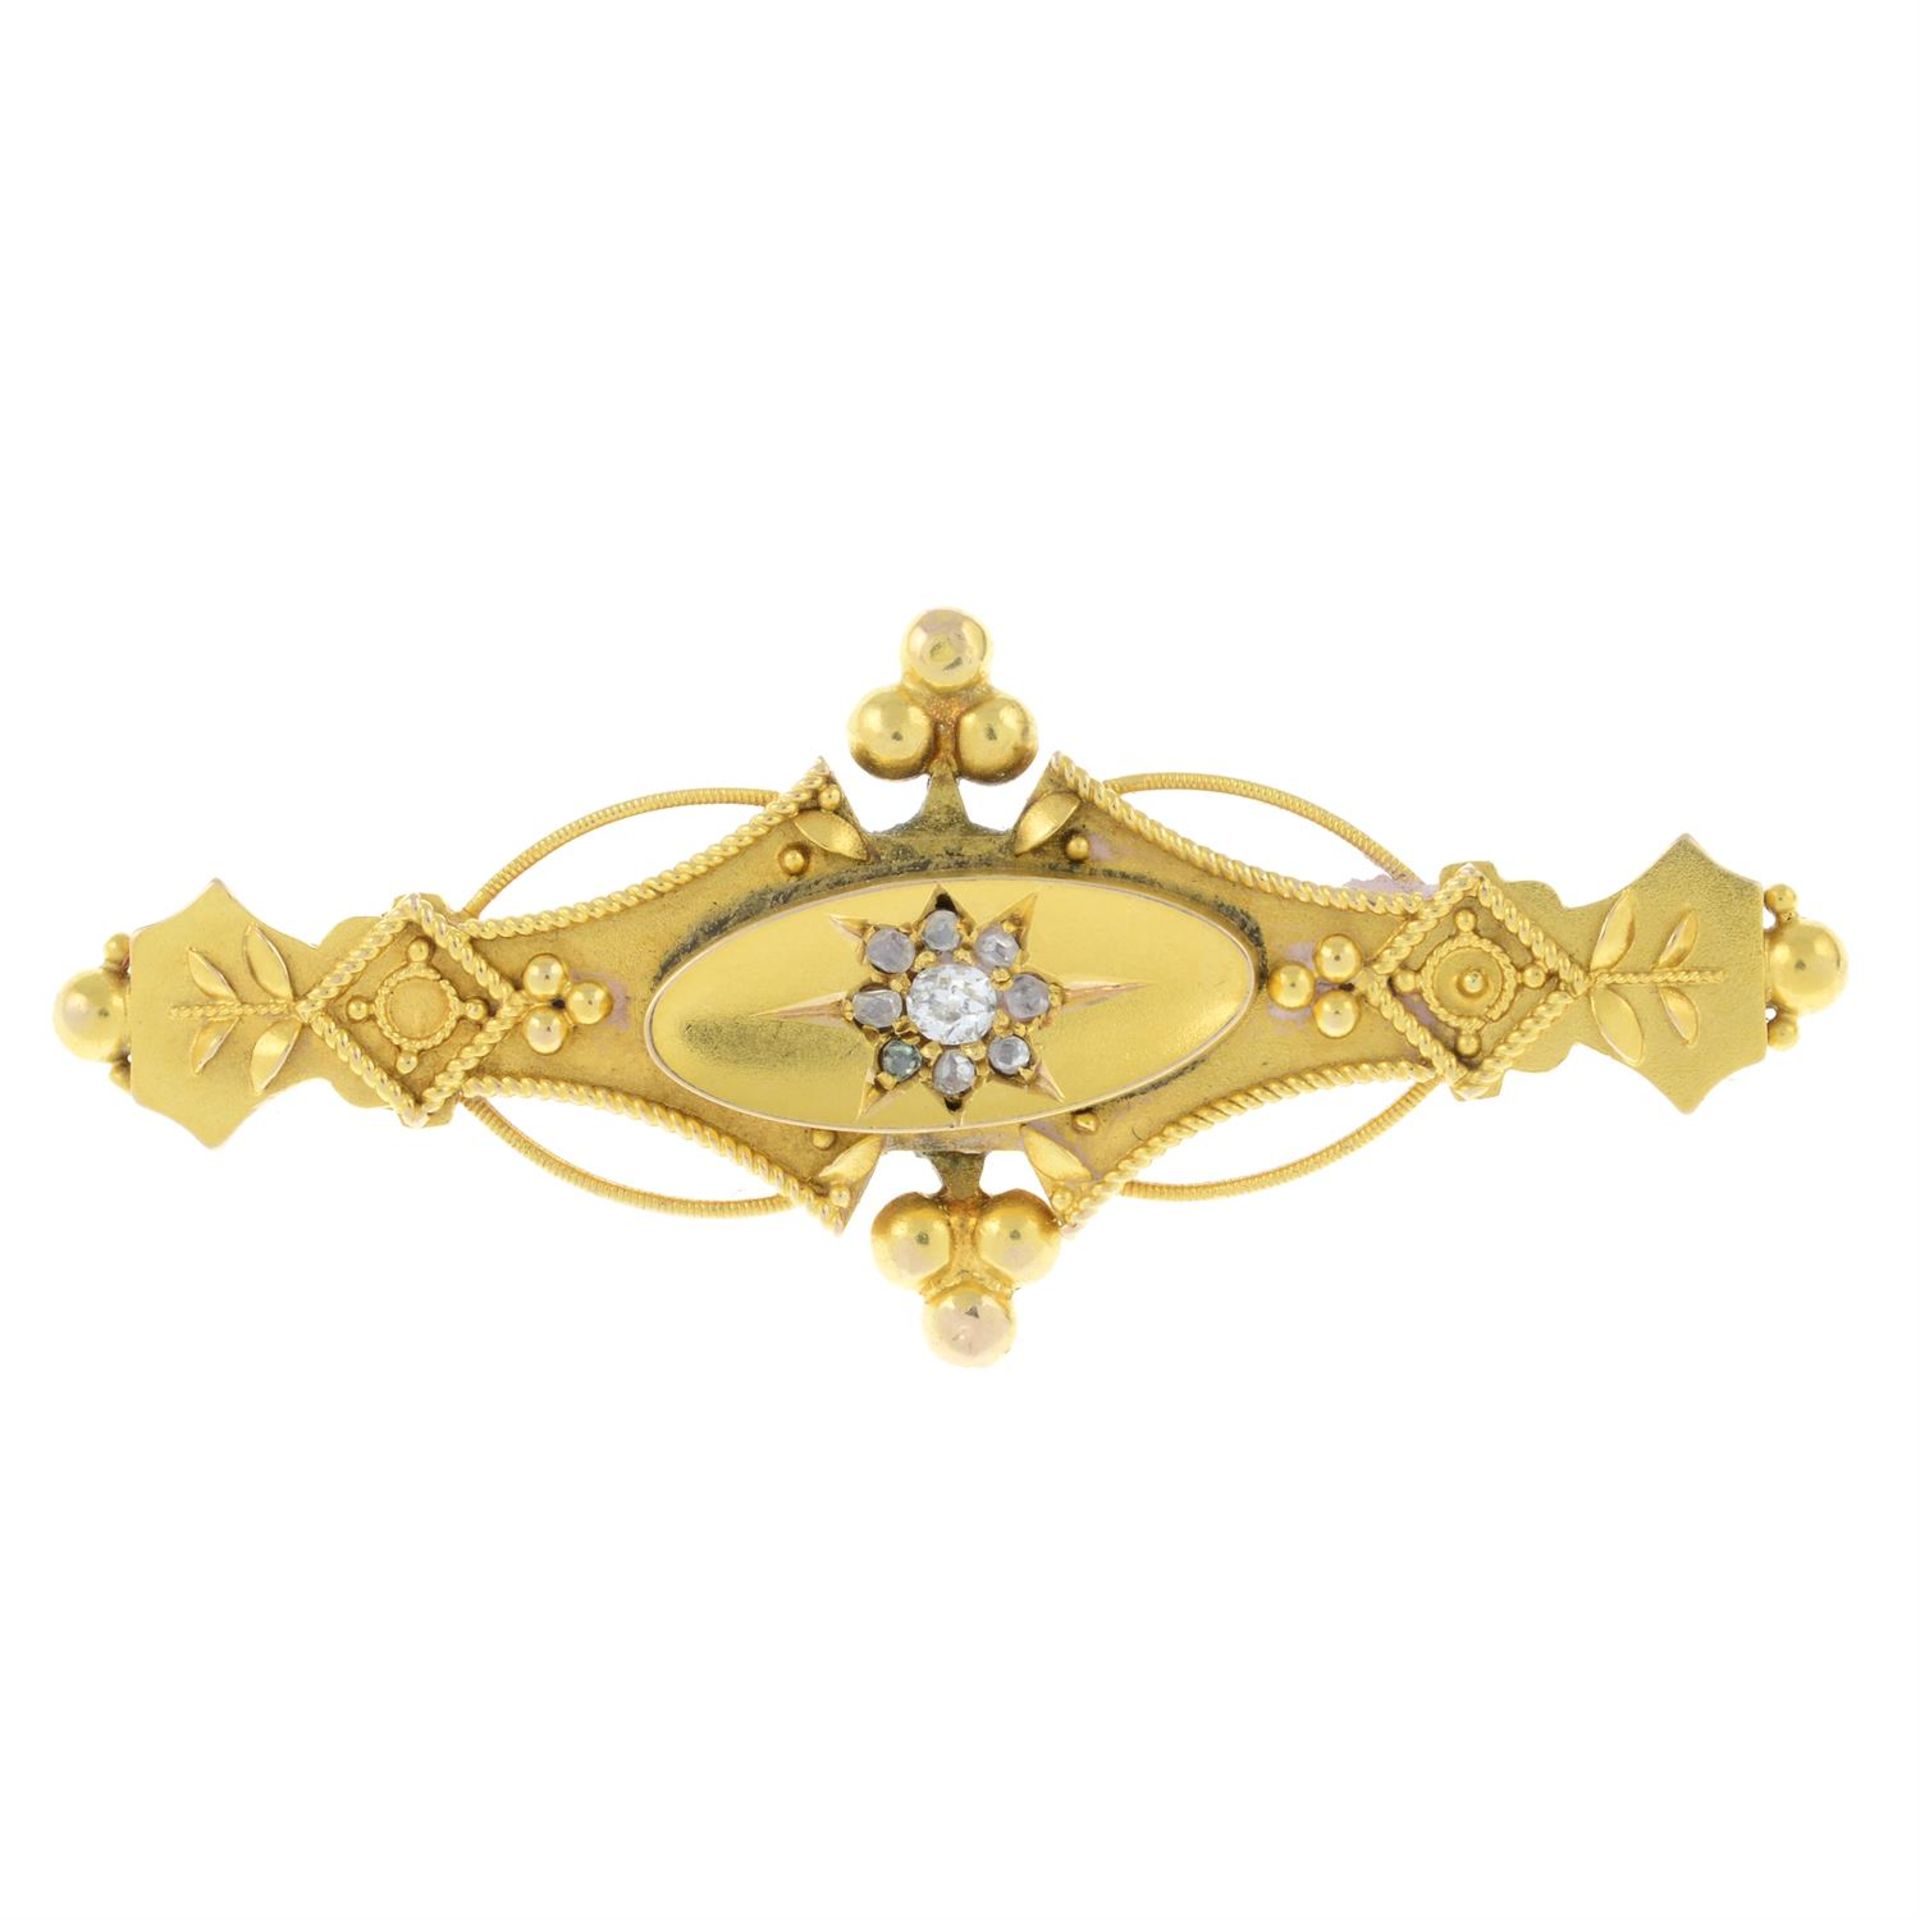 A mid 19th century gold old-cut diamond foliate bar brooch.